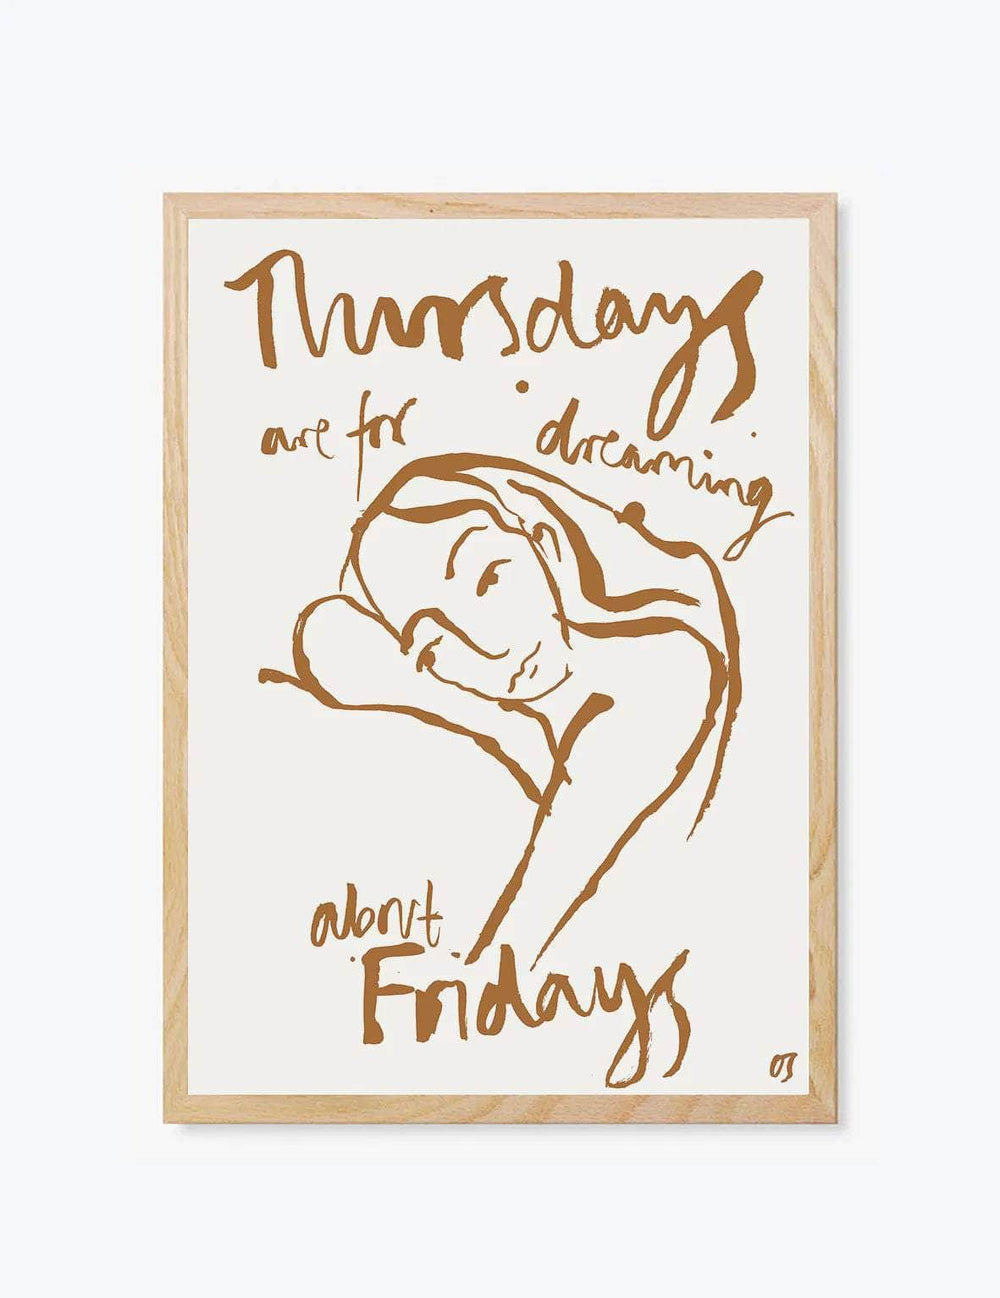 Thursday | Wall Art Print